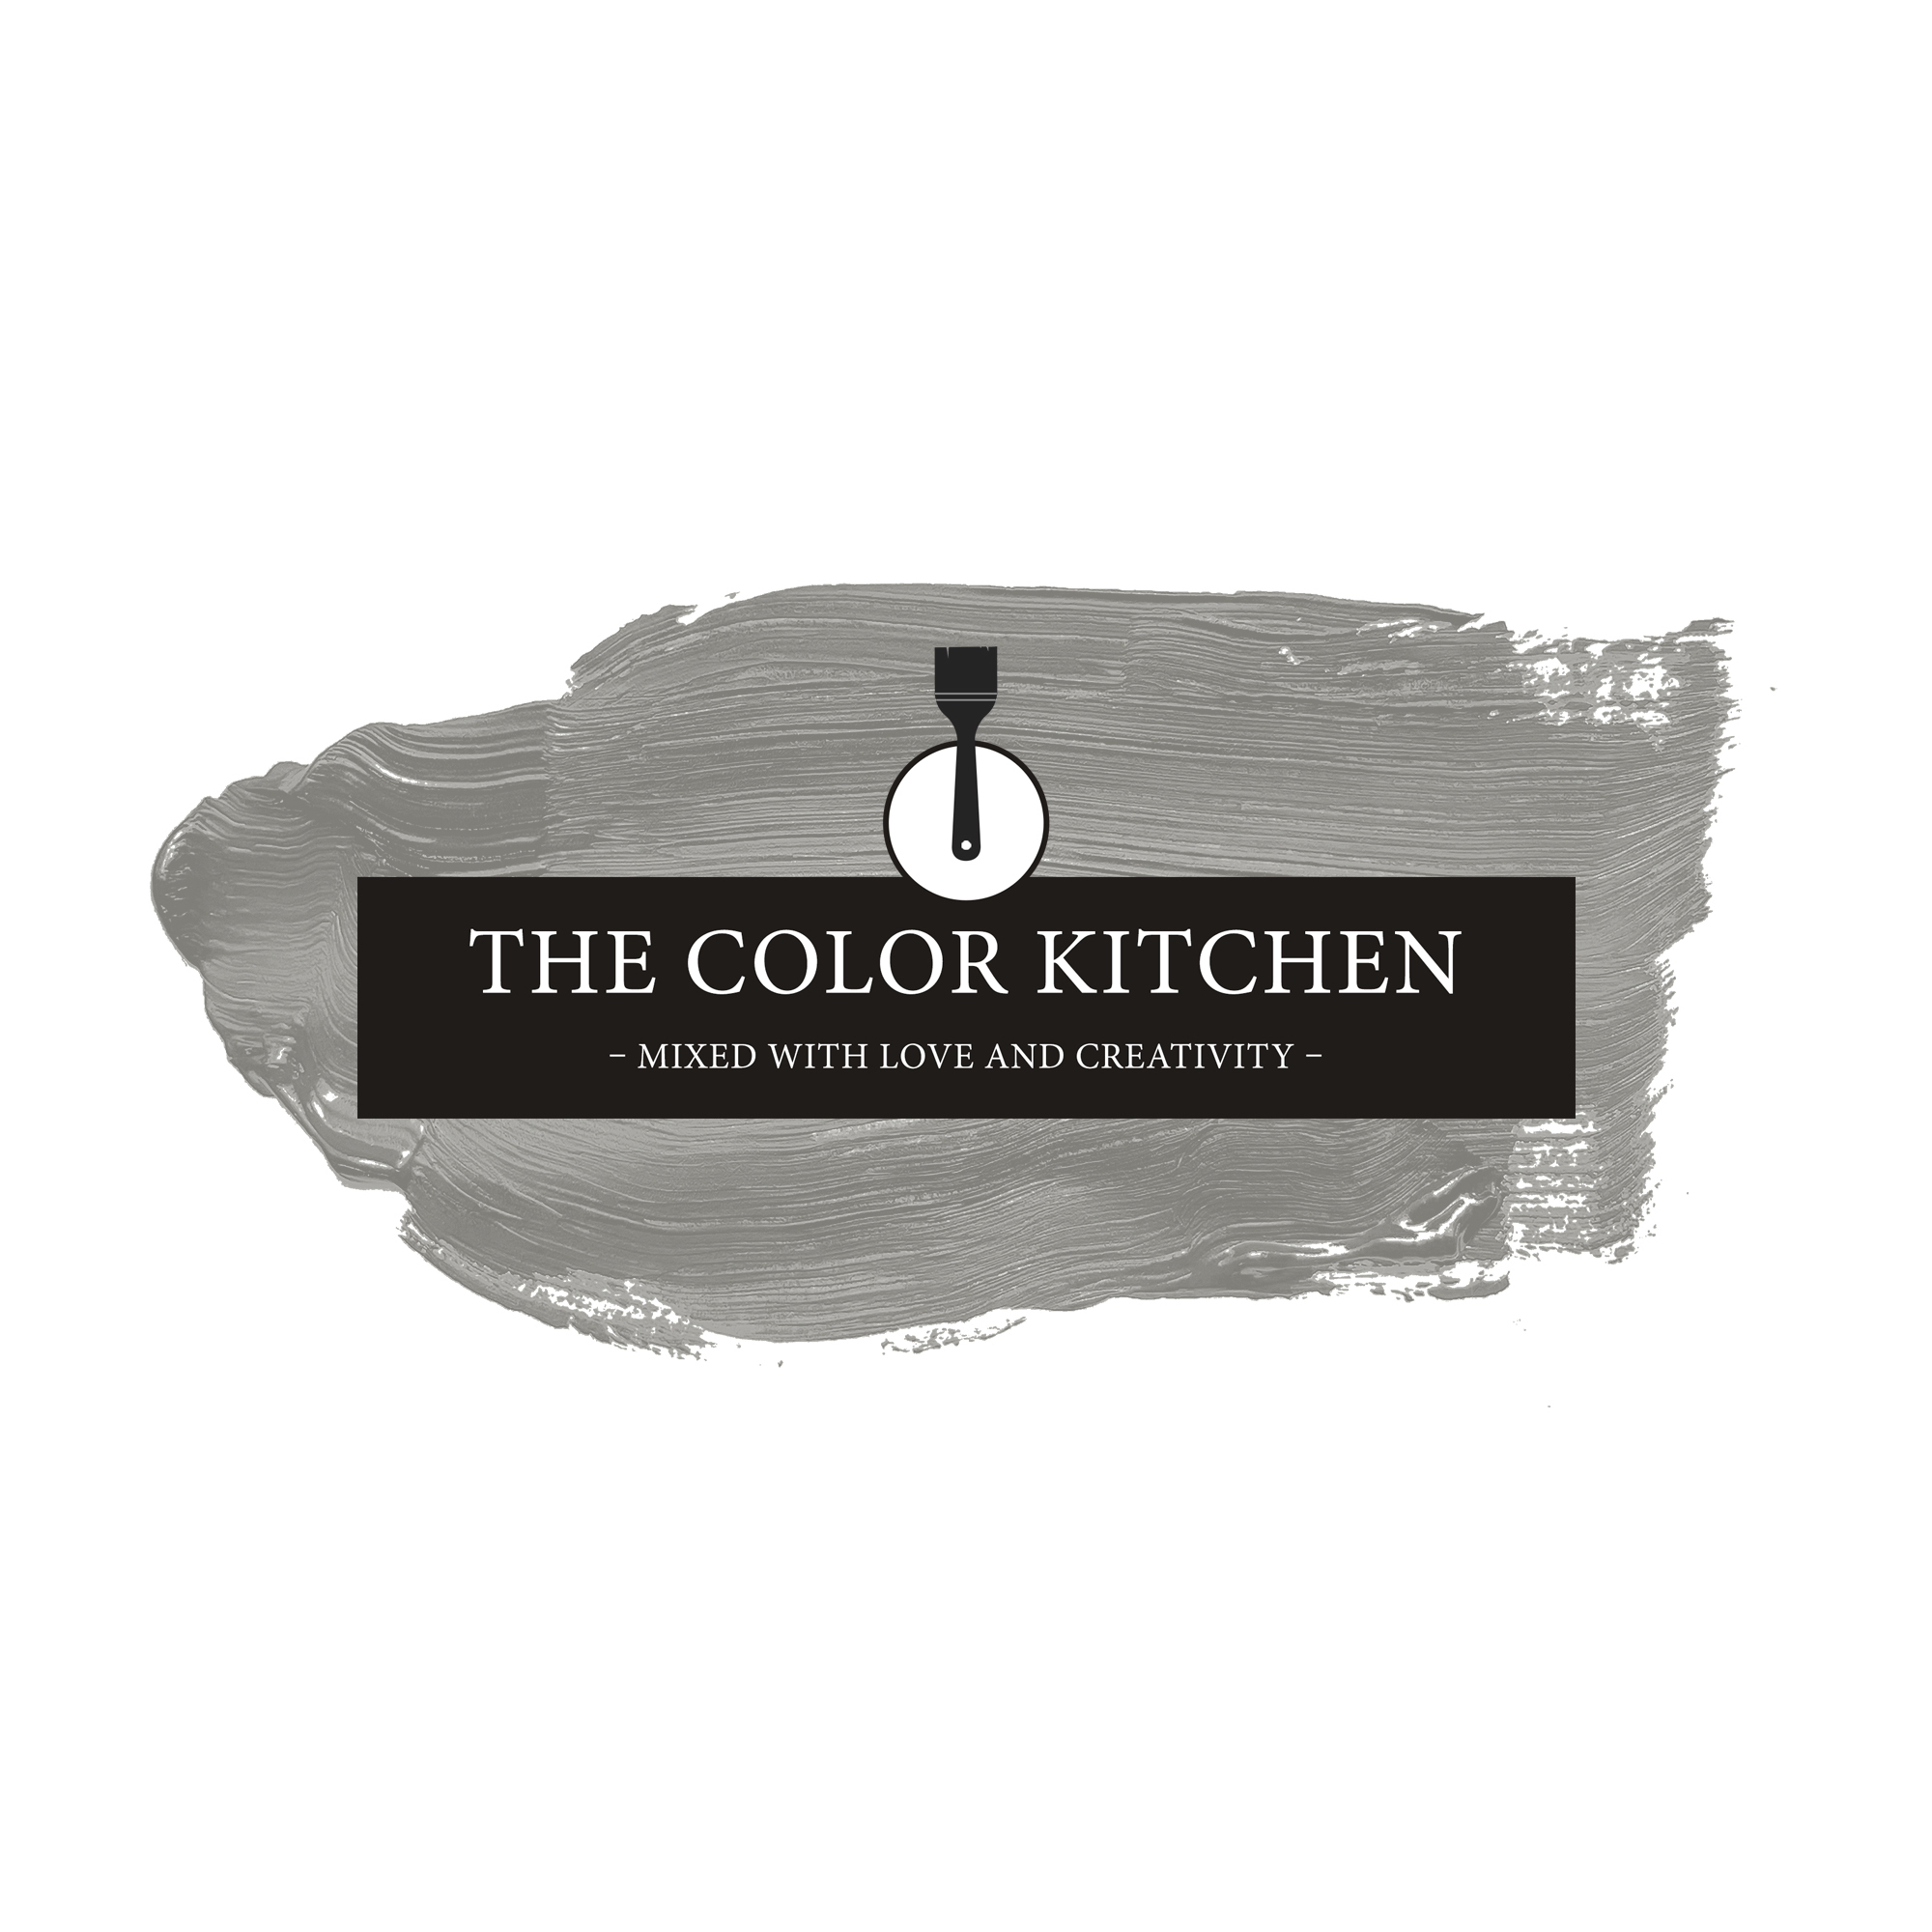 The Color Kitchen Grey Salt 5 l